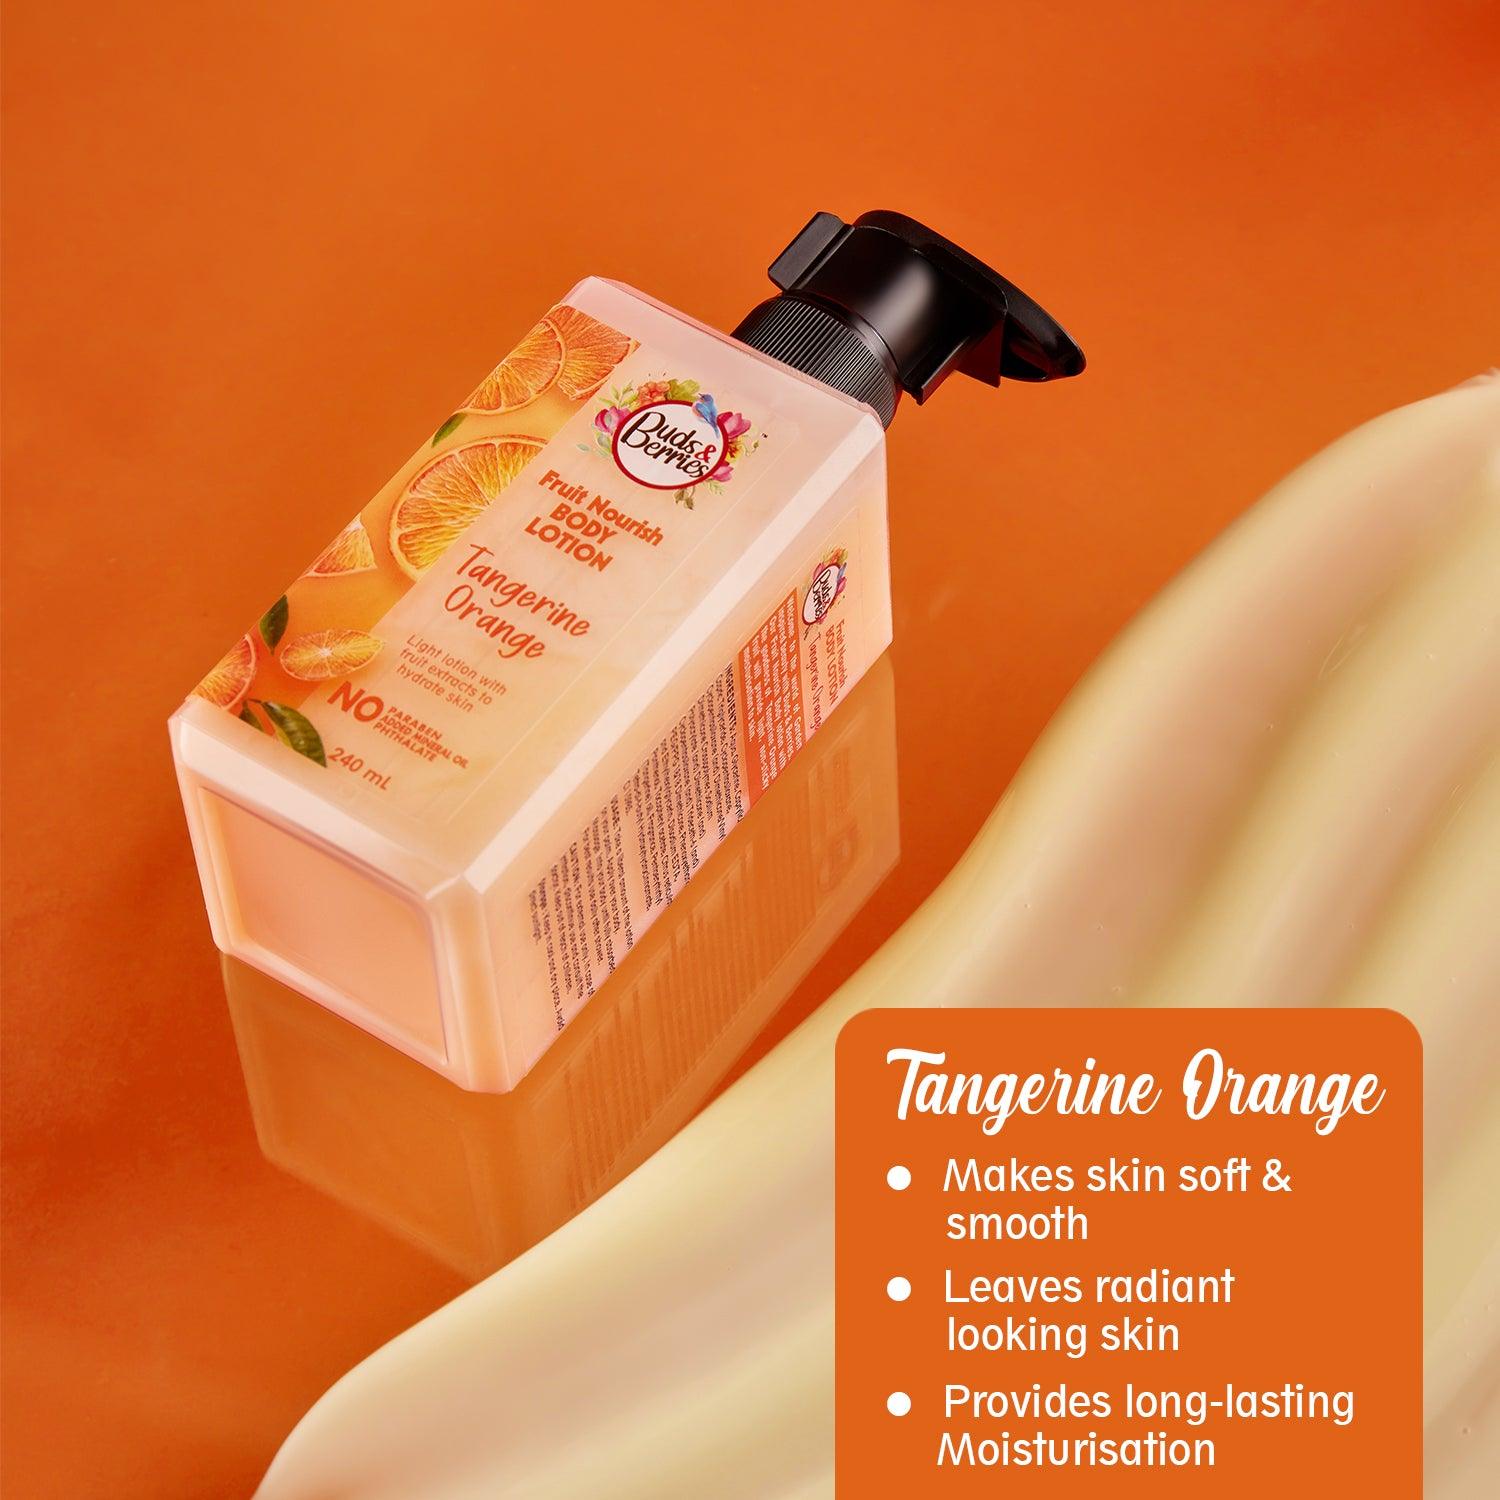 Oster Hydrosurge Tangerine clean Shampoo • Price »